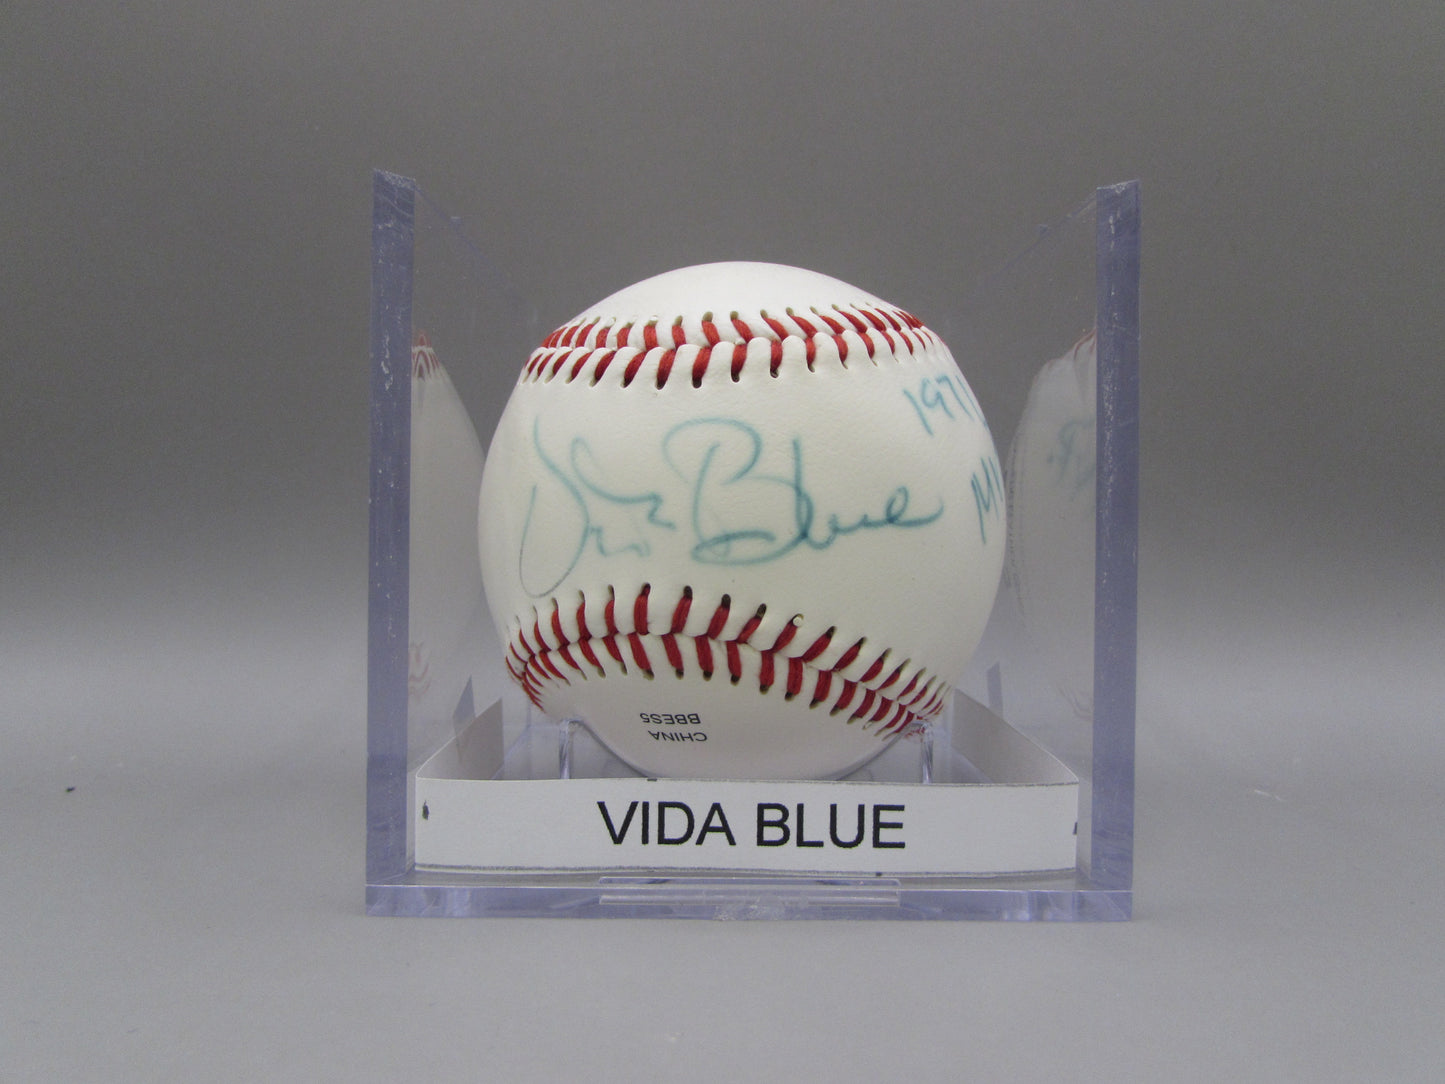 Vida Blue signed baseball